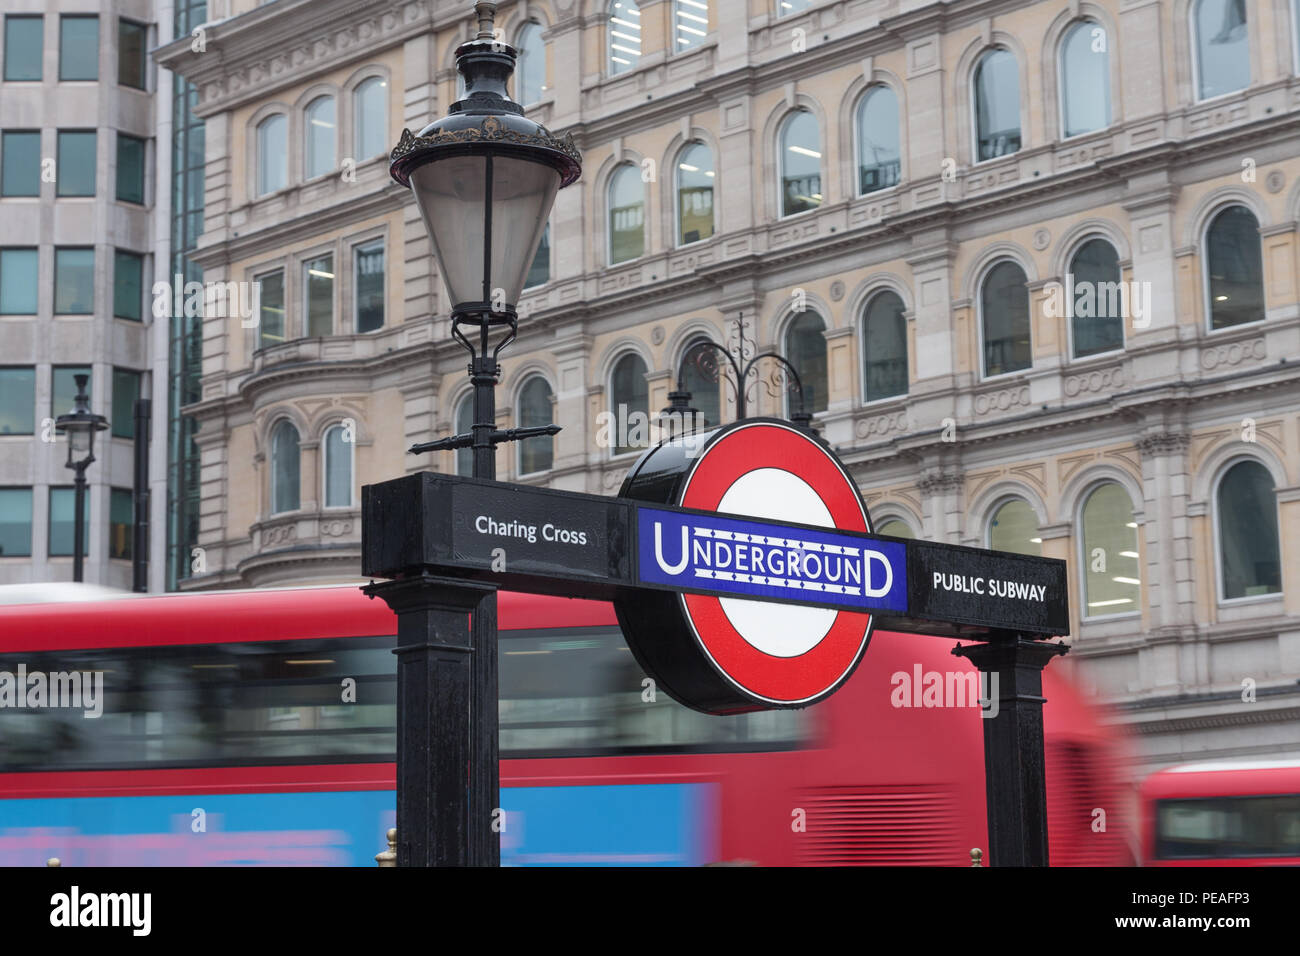 Underground Station Charing Cross On Trafalgar Square In London